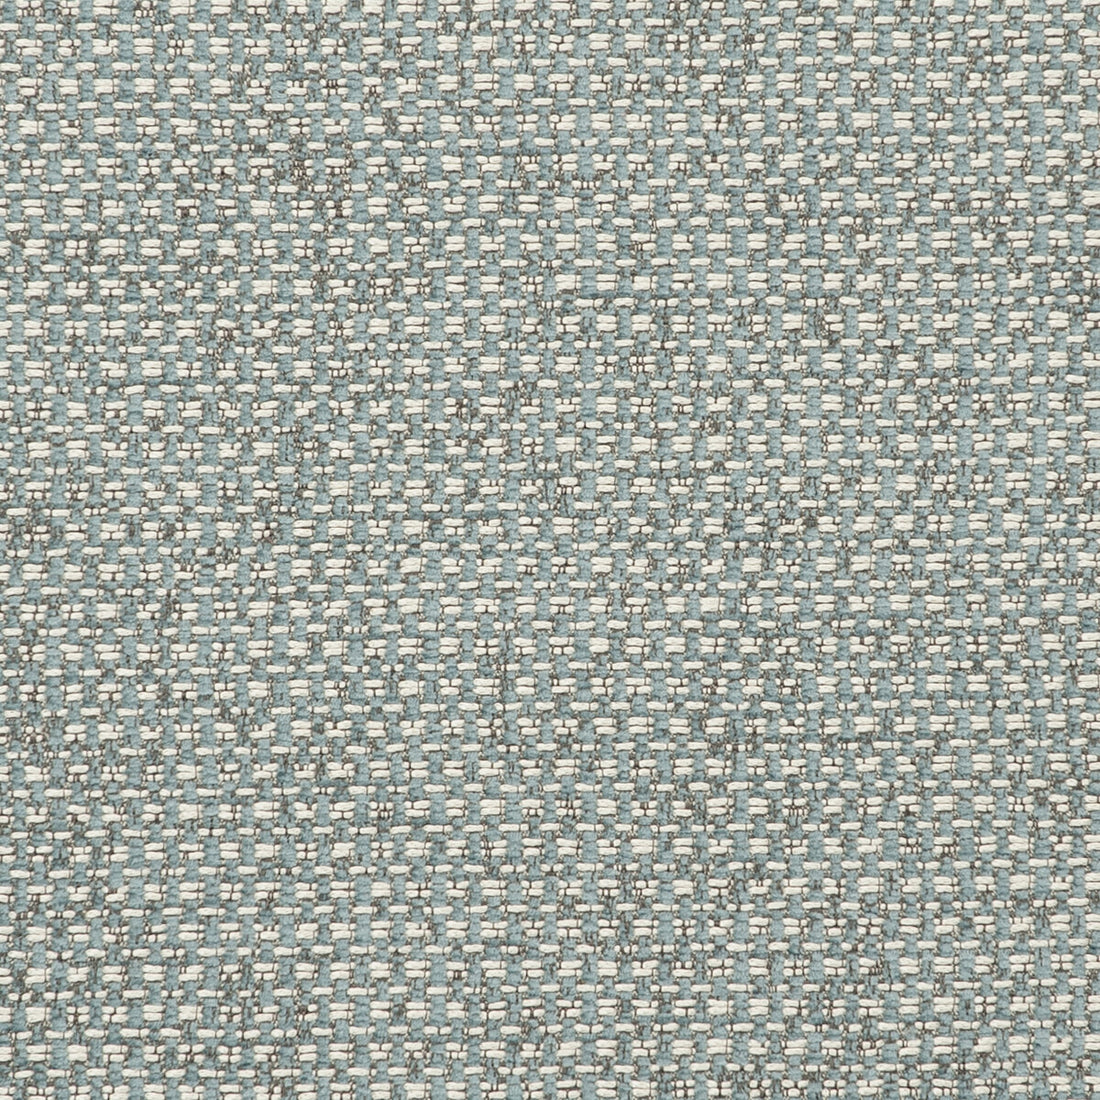 Casanova fabric in tourmaline color - pattern F0723/25.CAC.0 - by Clarke And Clarke in the Clarke &amp; Clarke Casanova collection